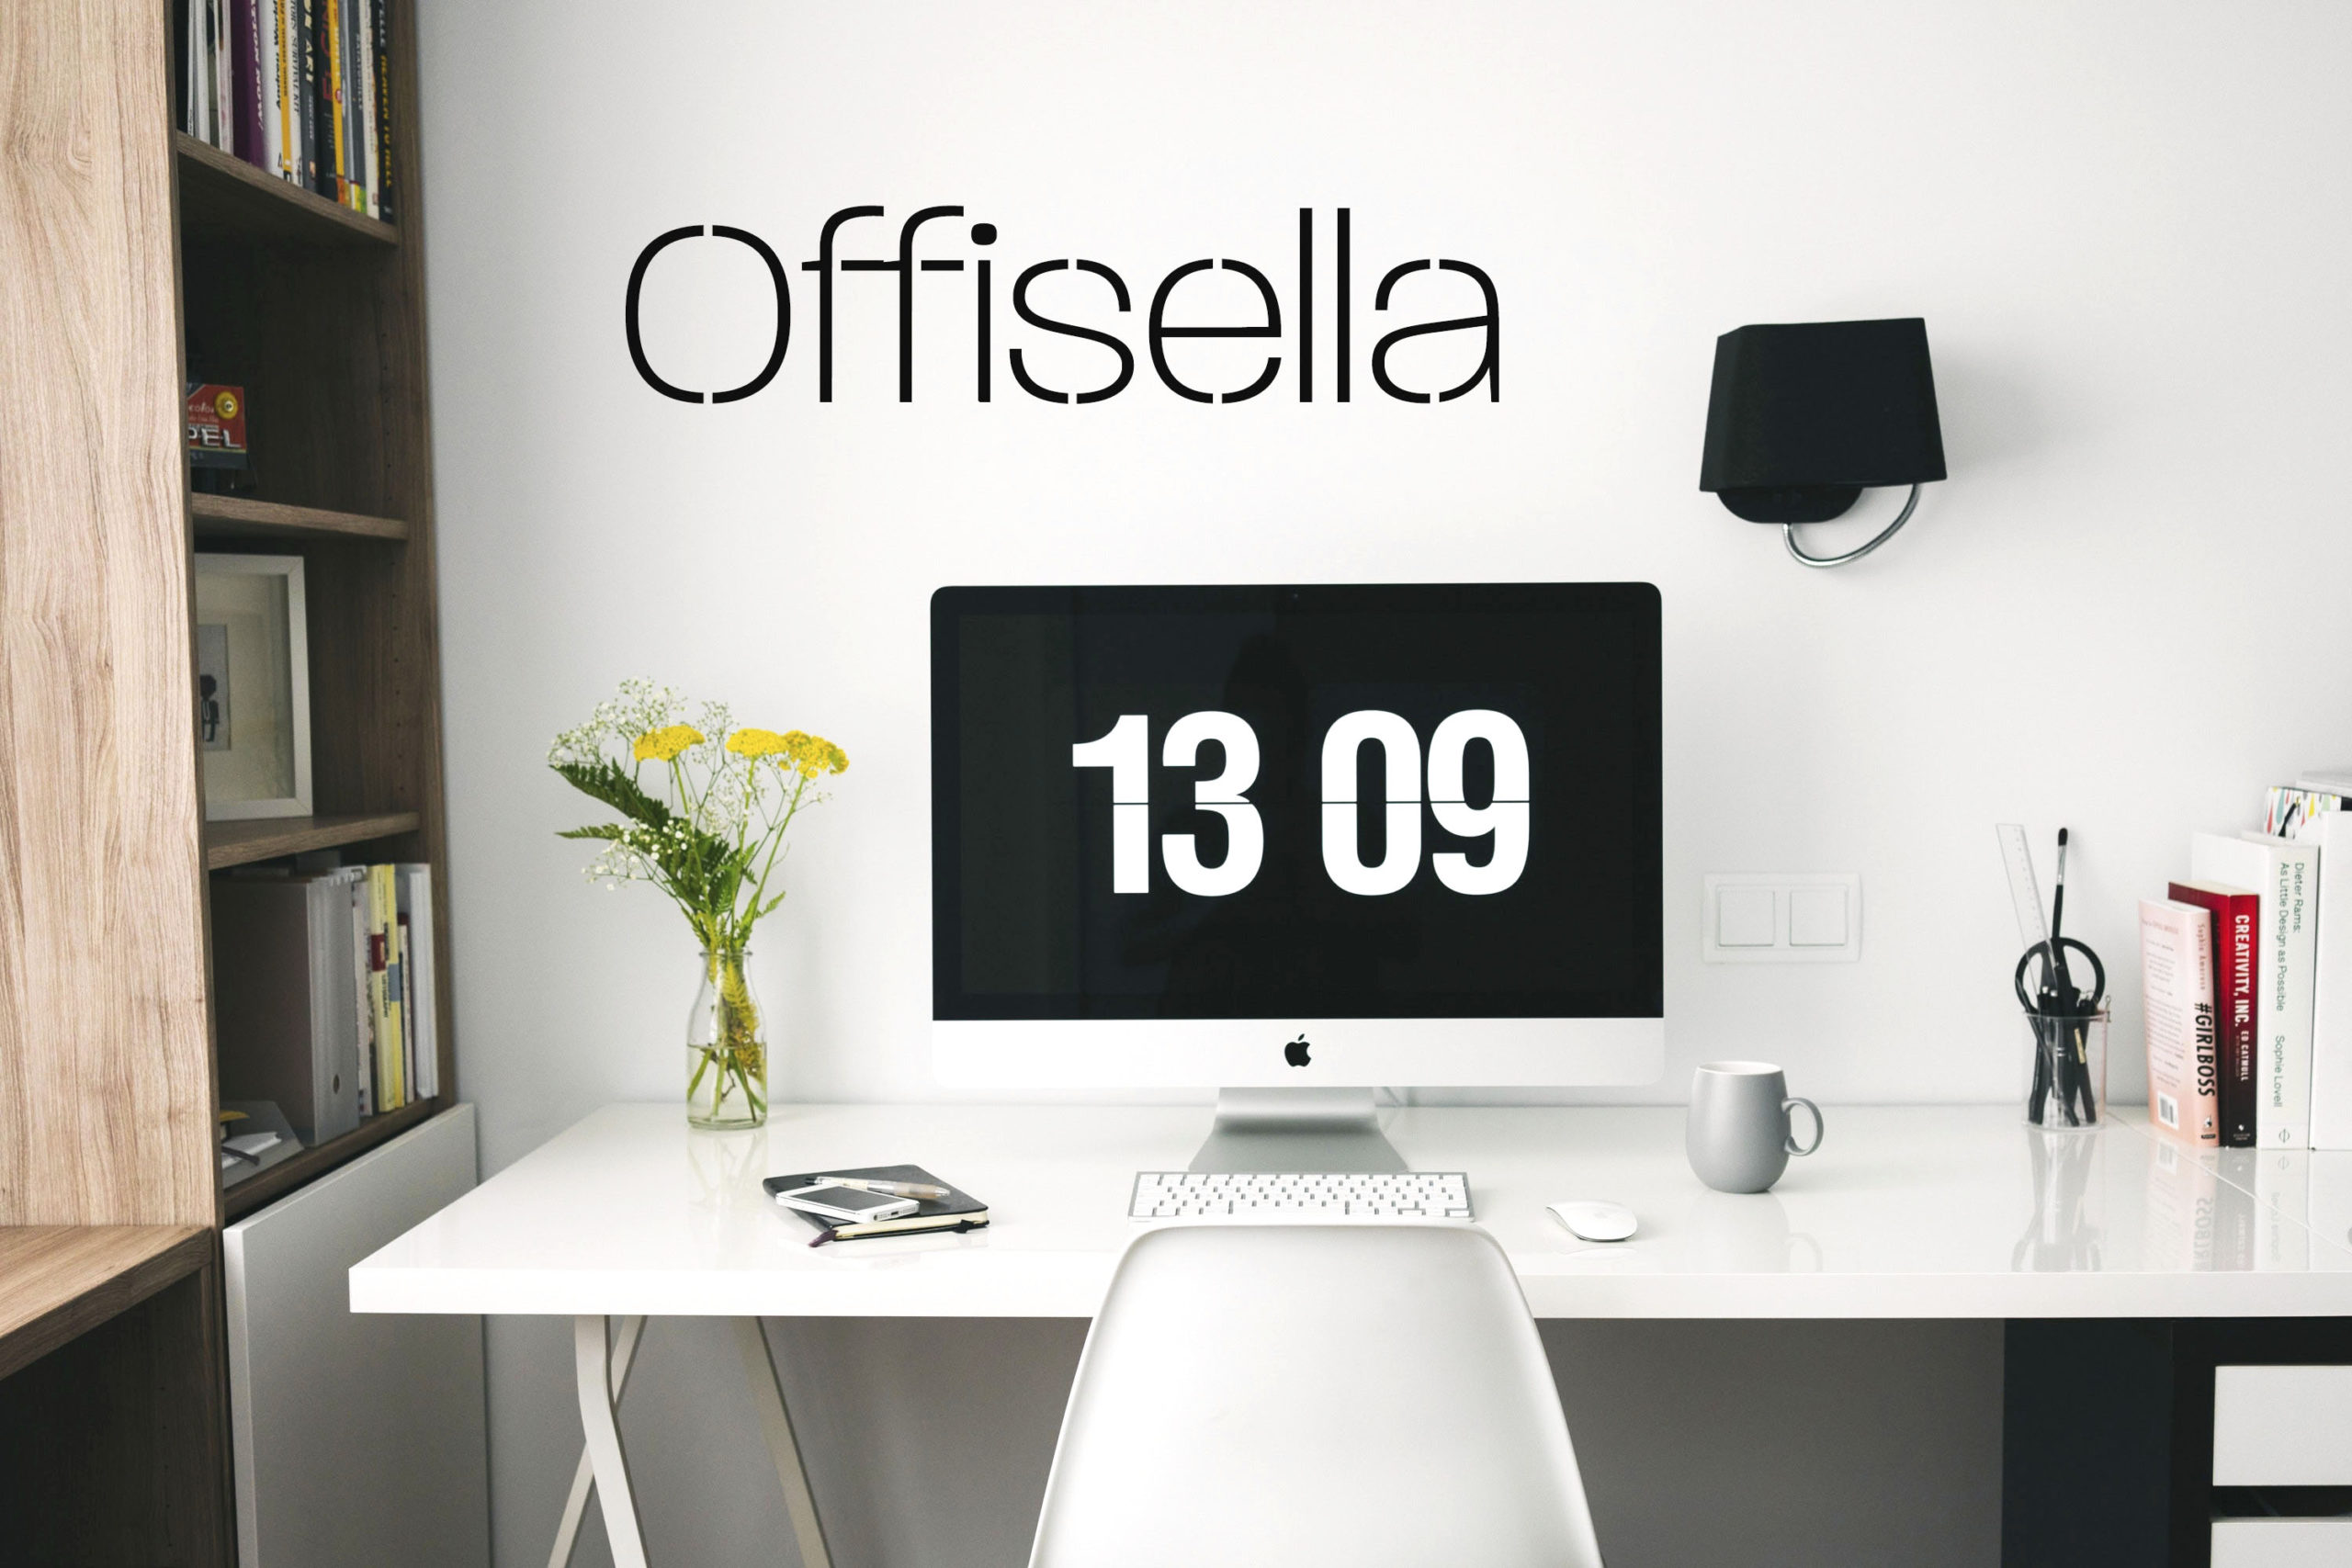 Officella